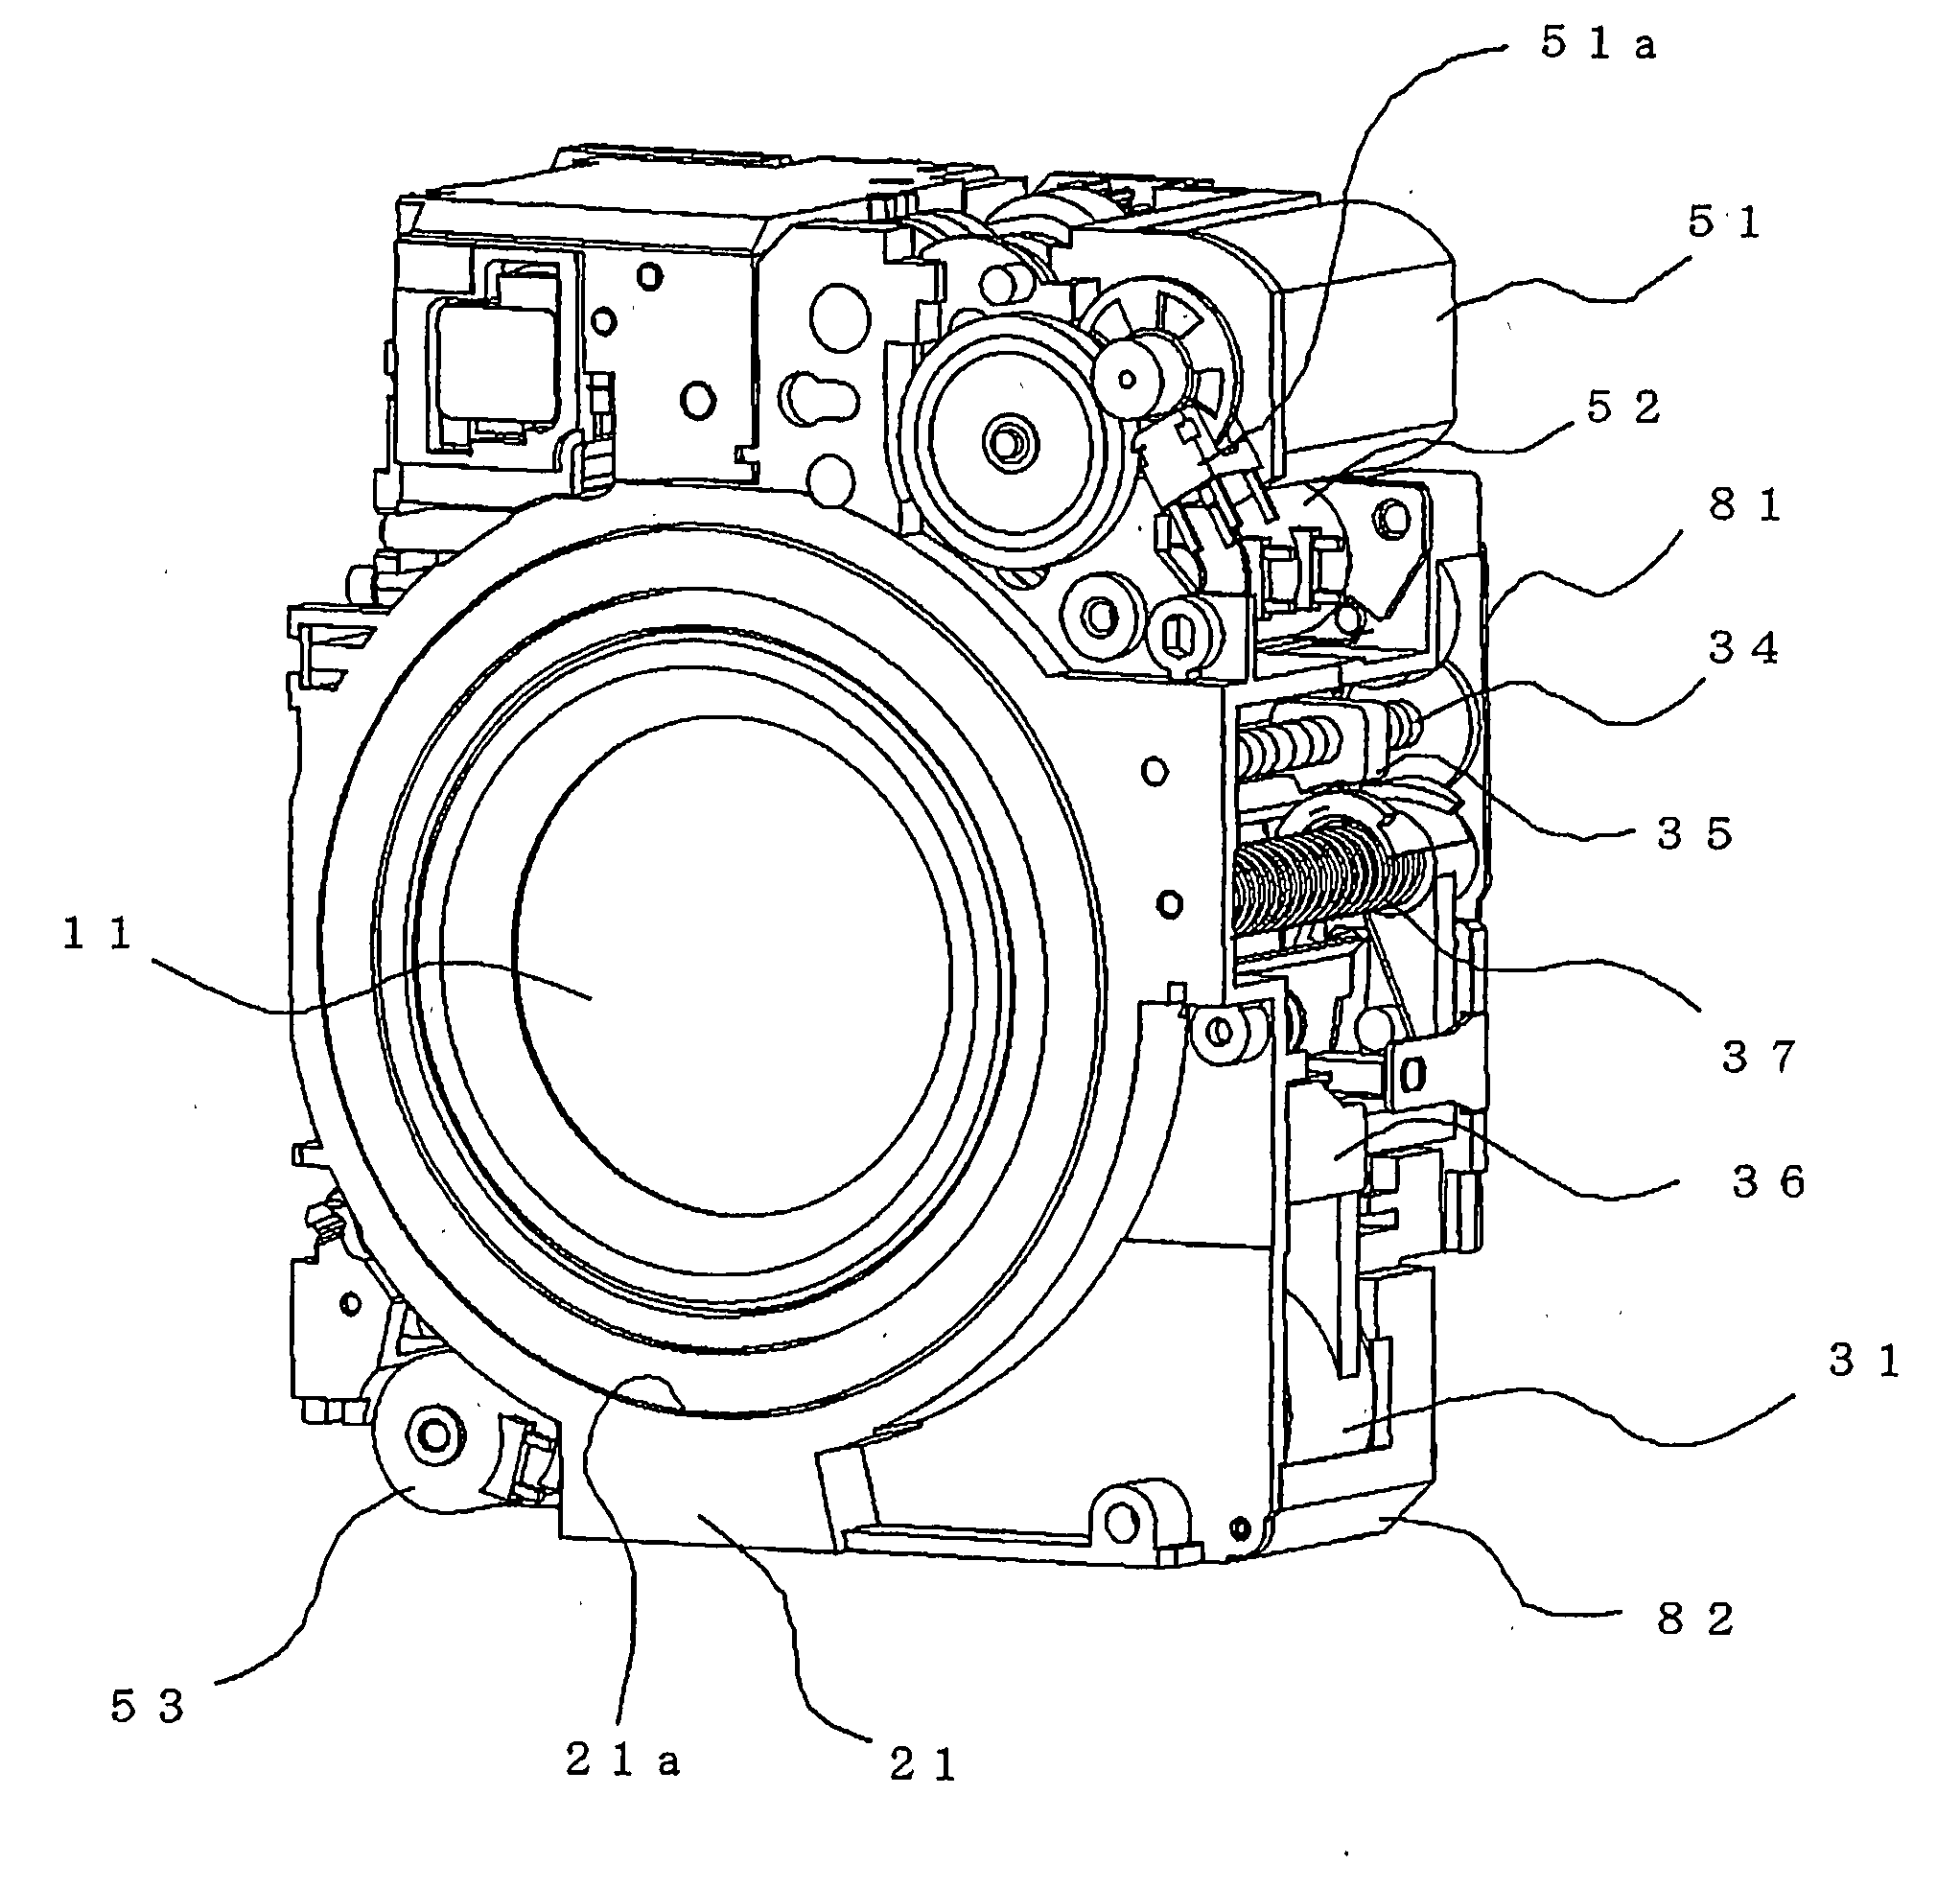 Lens barrel, camera and mobile information terminal